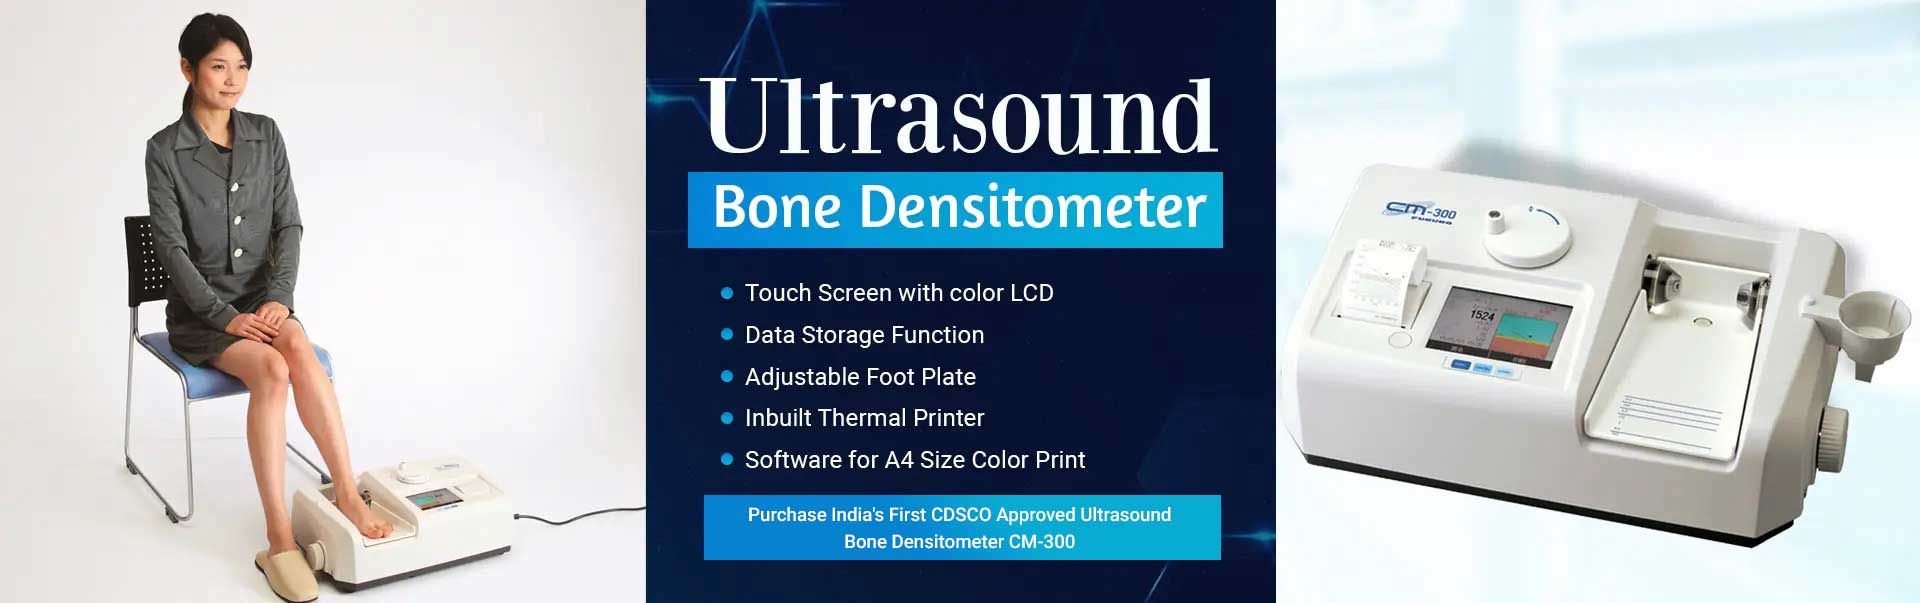 Ultrasound Bone Densitometer Manufacturers in Bhiwandi